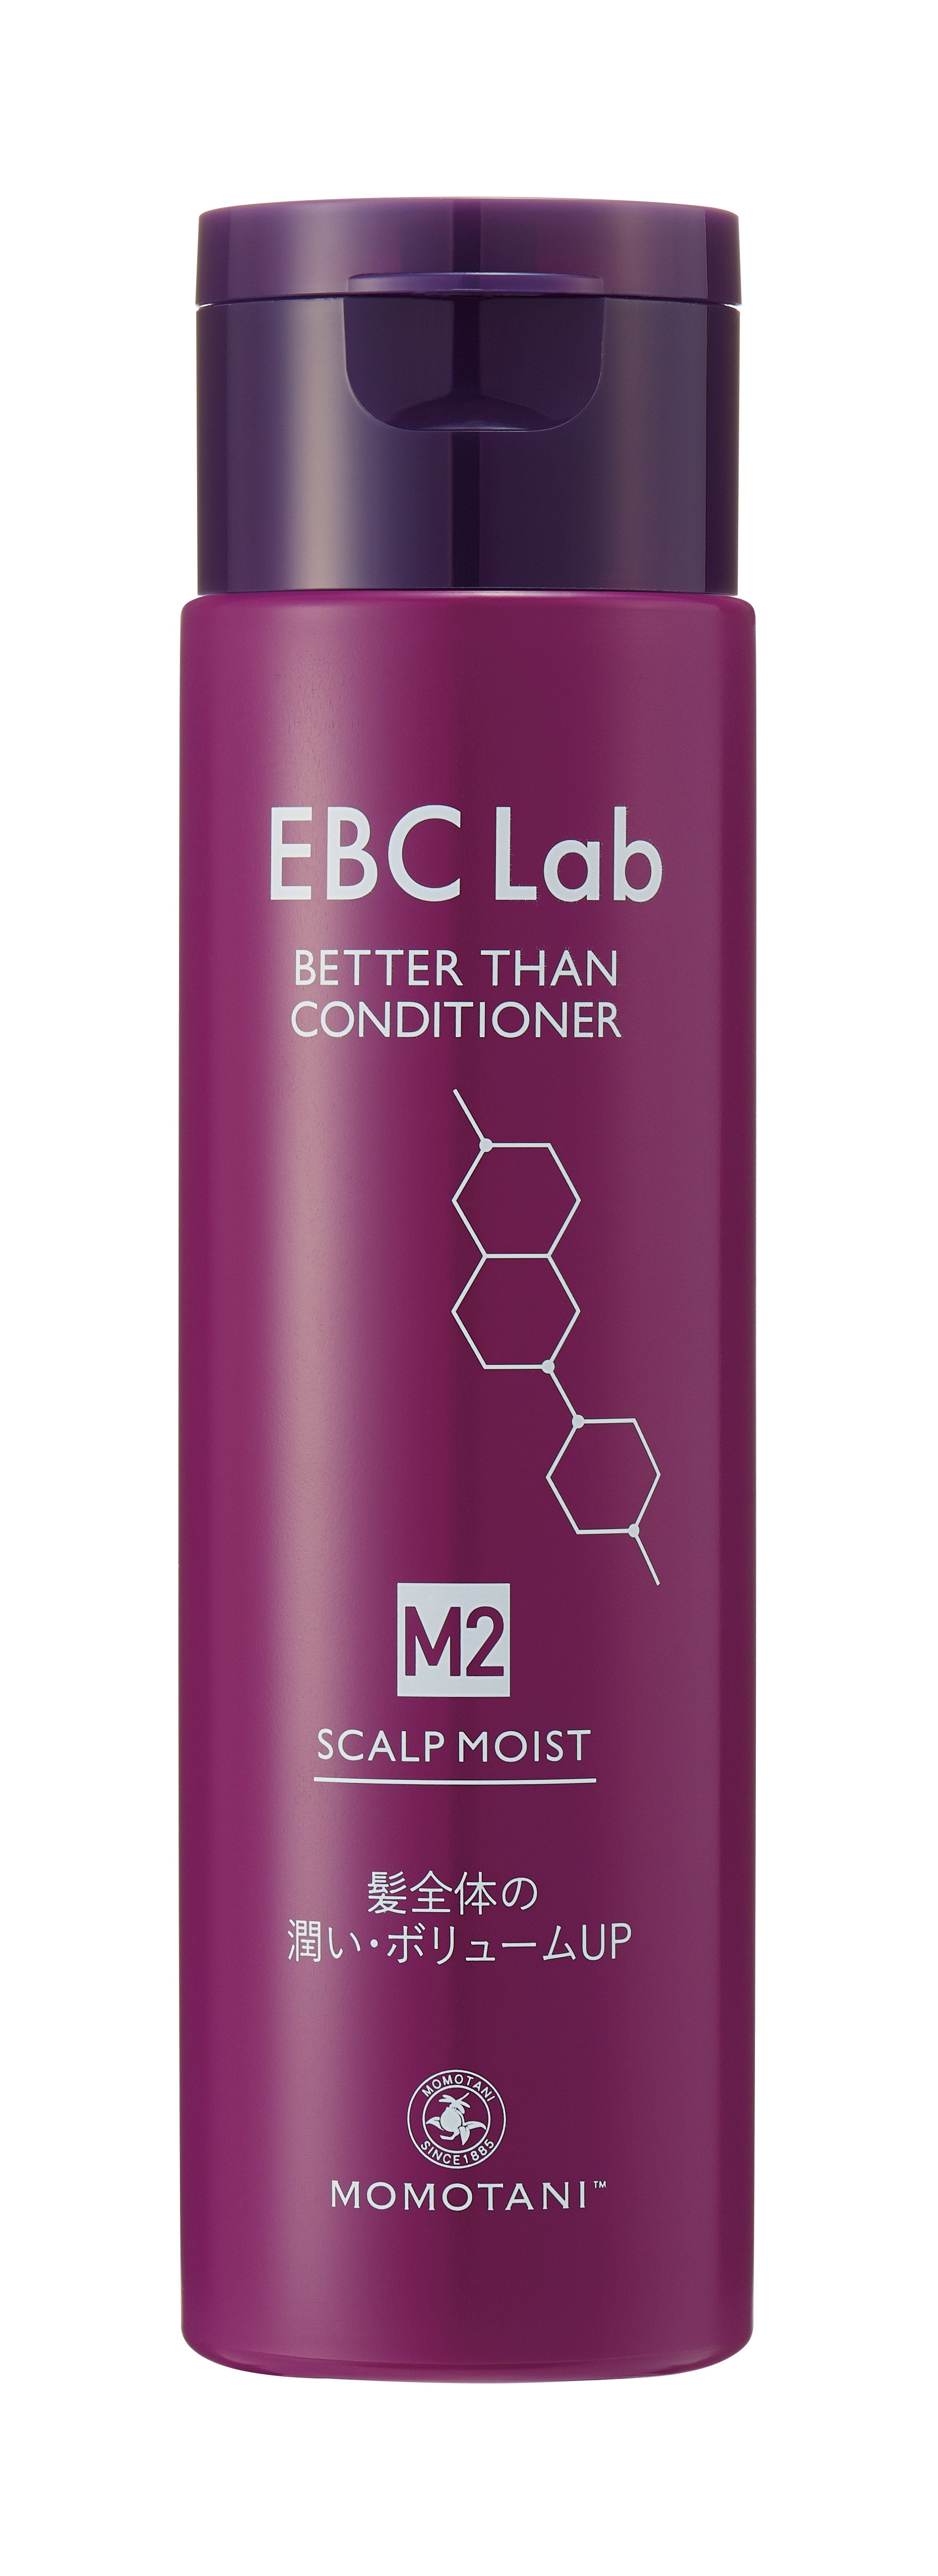 MOMOTANI EBC Lab Scalp Moist Conditioner 290ml